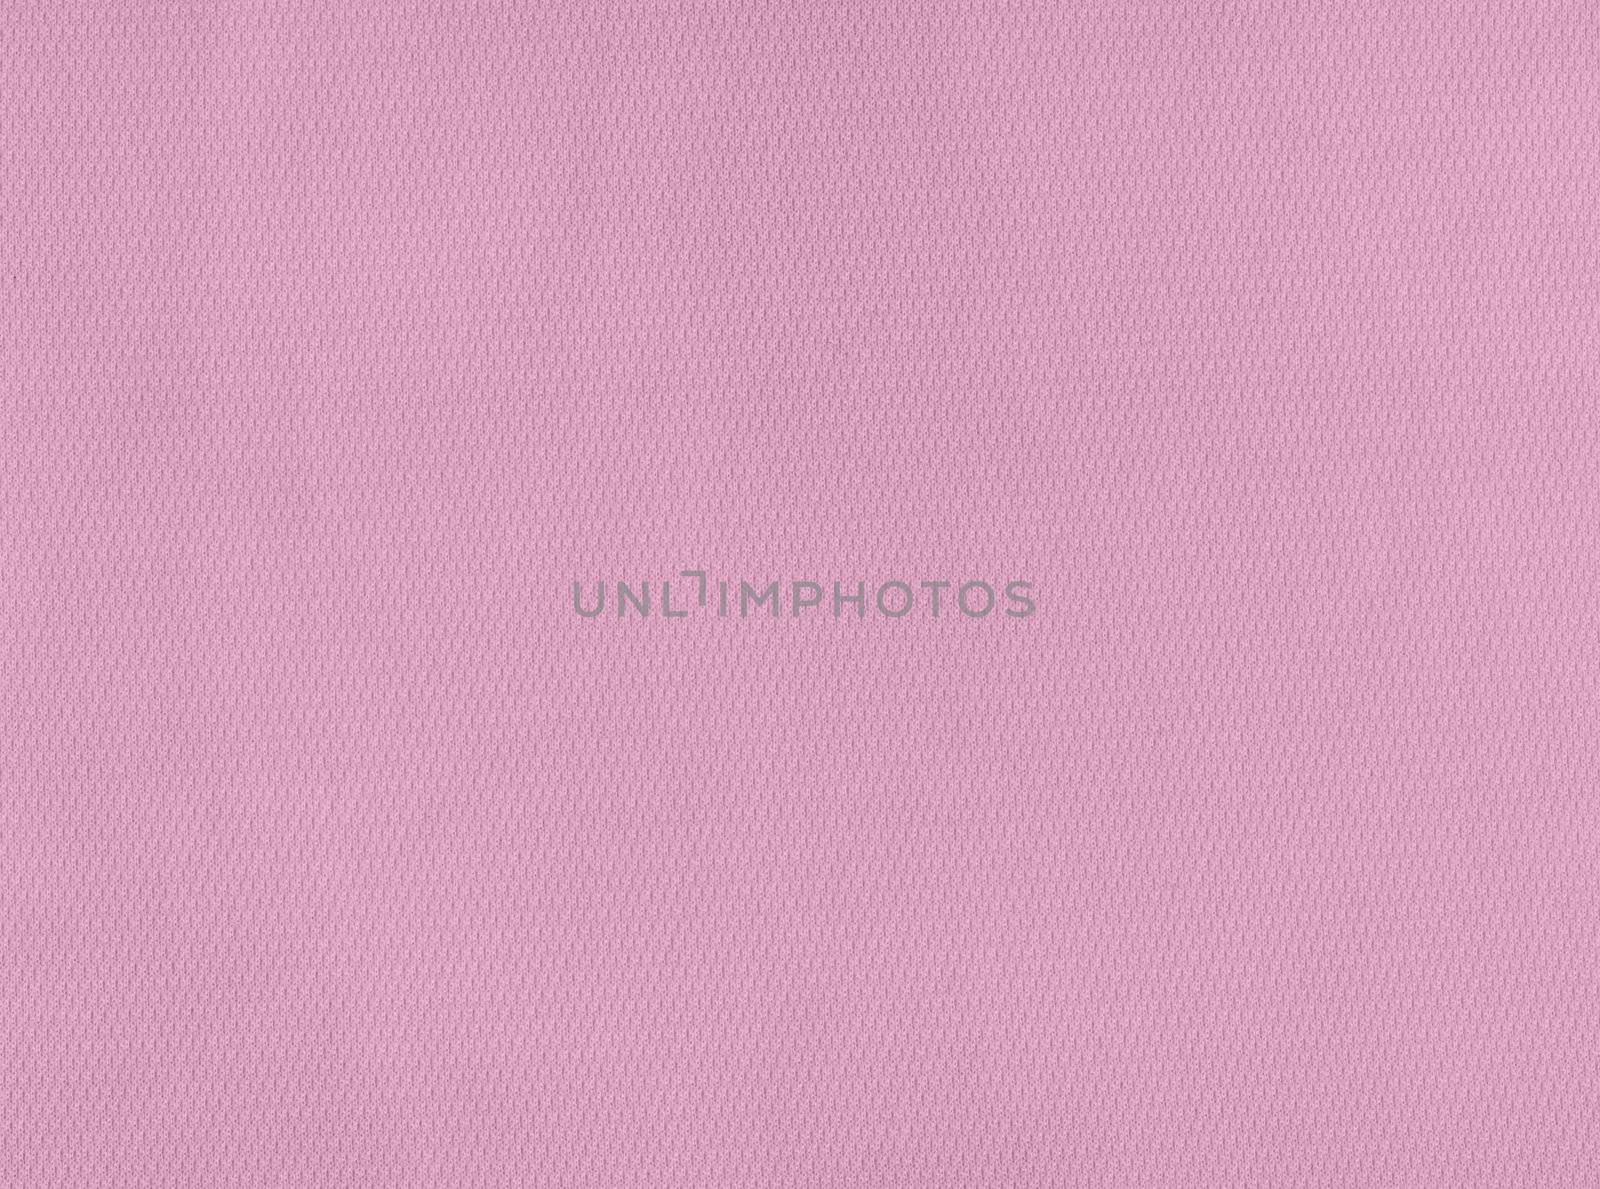 Closeup on a Pink Sport Jersey Mesh Textile